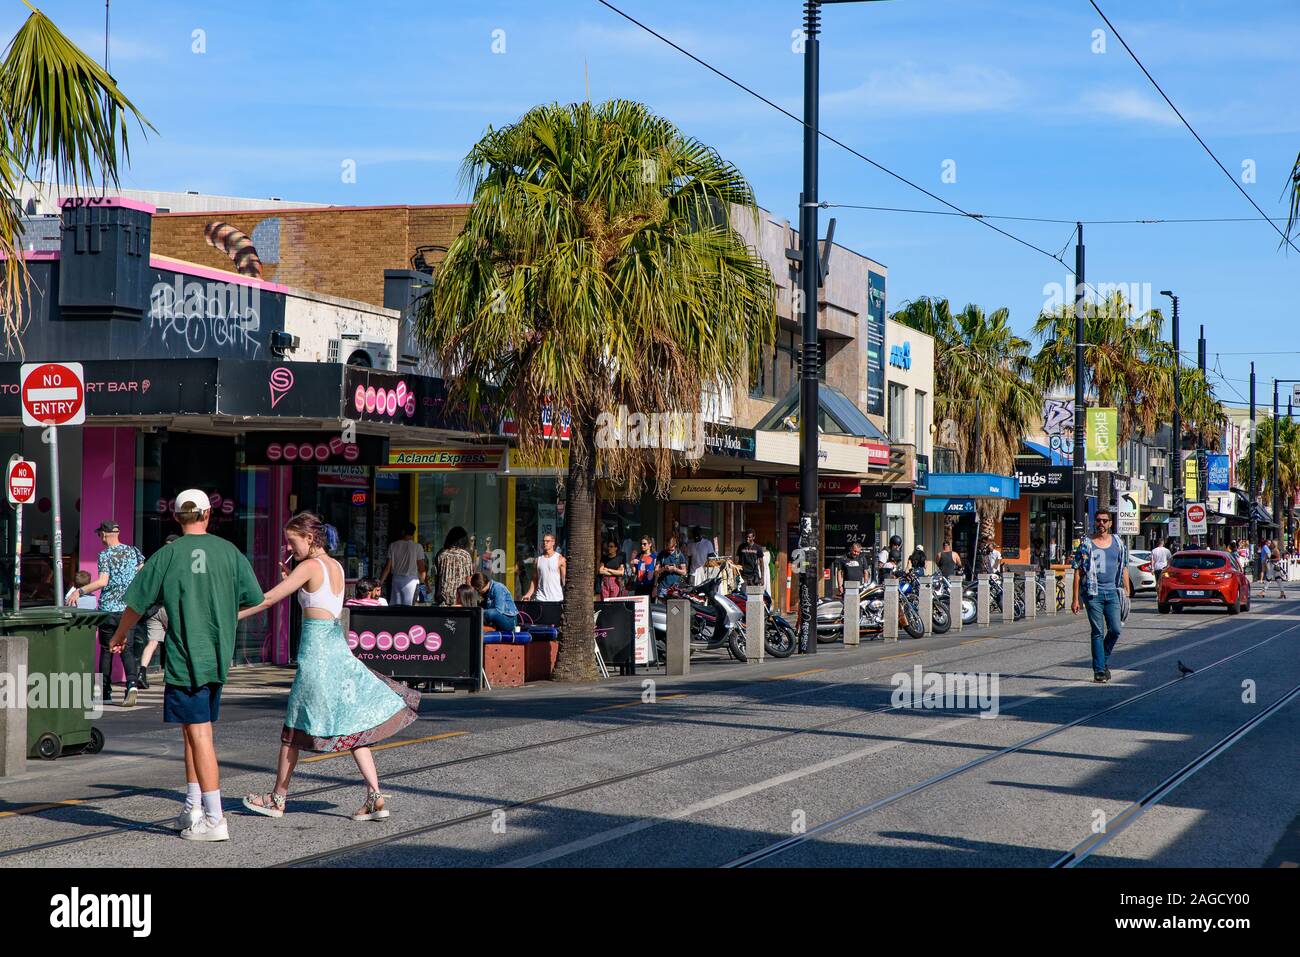 Street view of St Kilda, a famous beach town in Melbourne, Australia Stock Photo